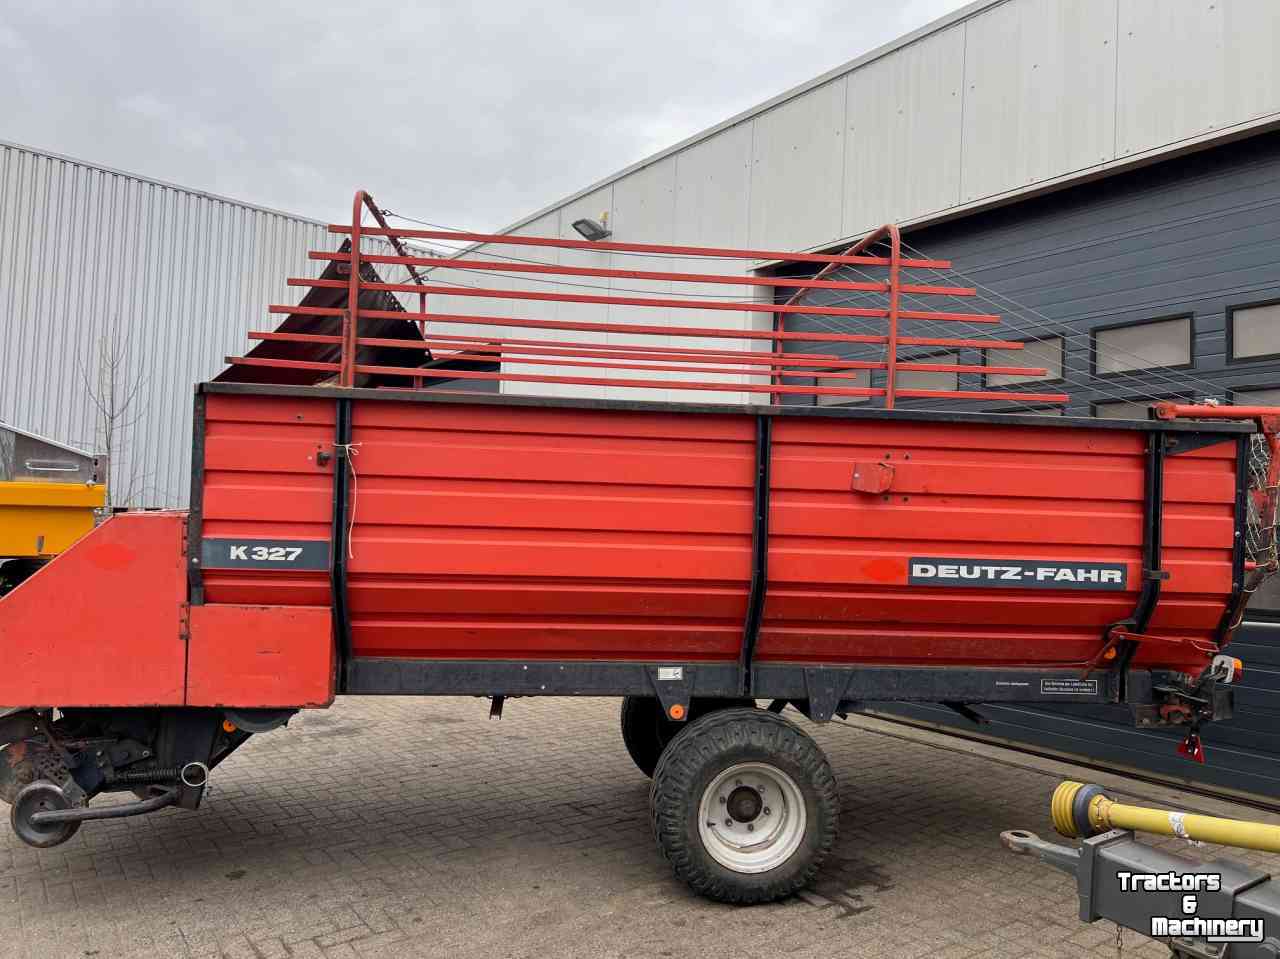 Self-loading wagon Deutz-Fahr K327